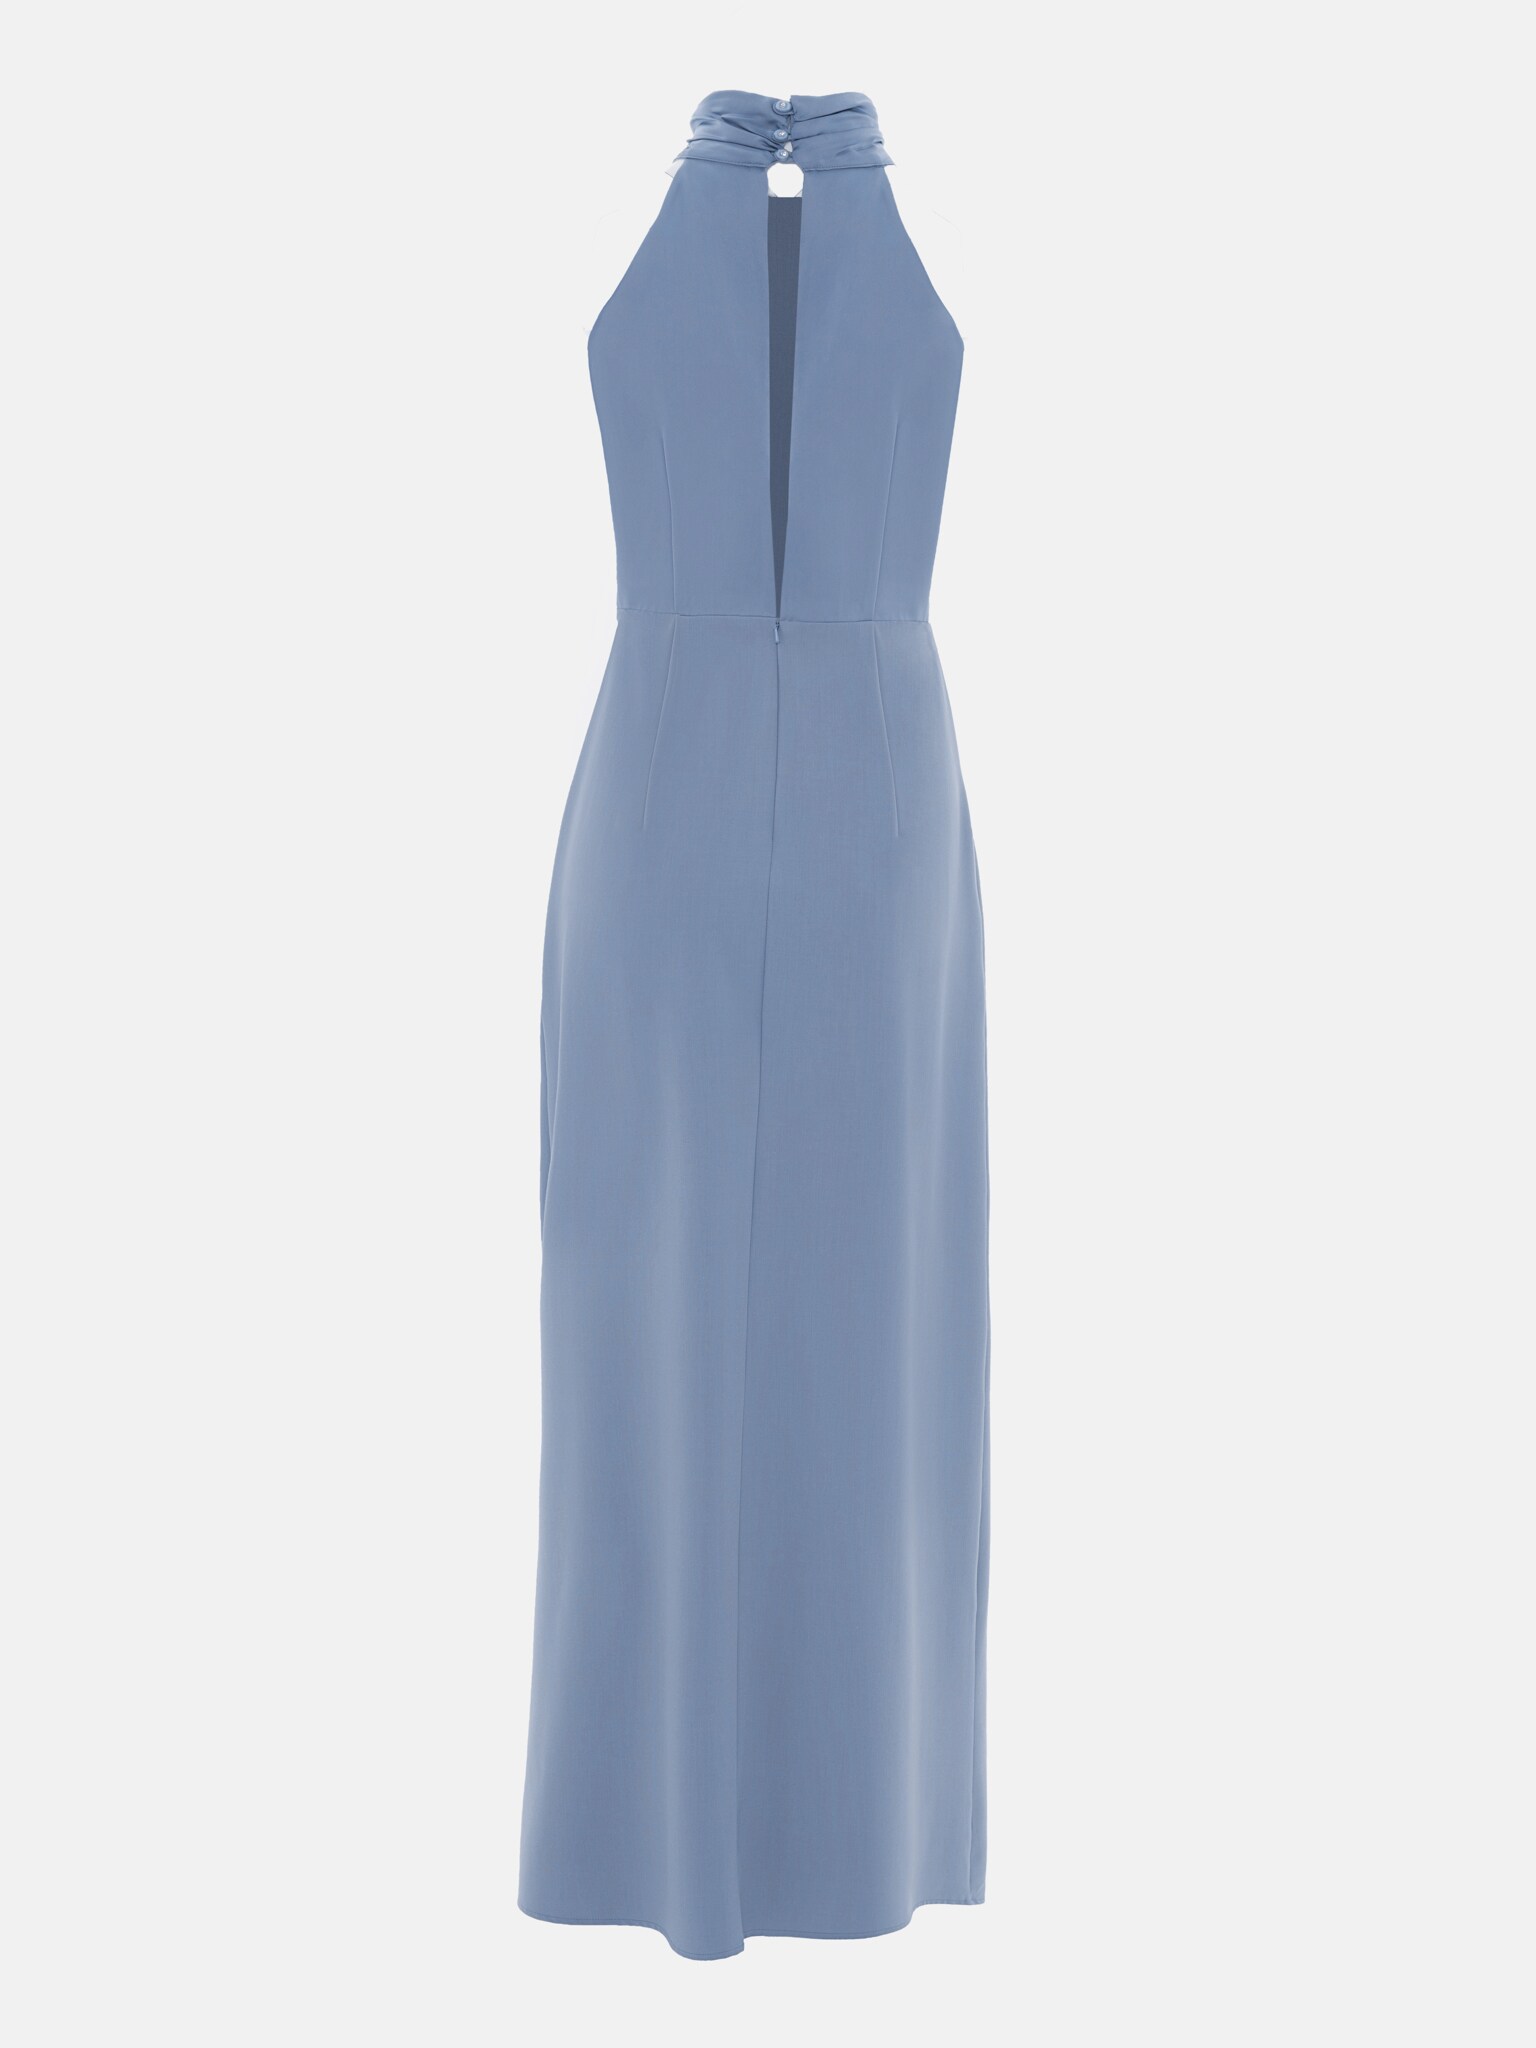 Satin maxi dress with high collar :: LICHI - Online fashion store